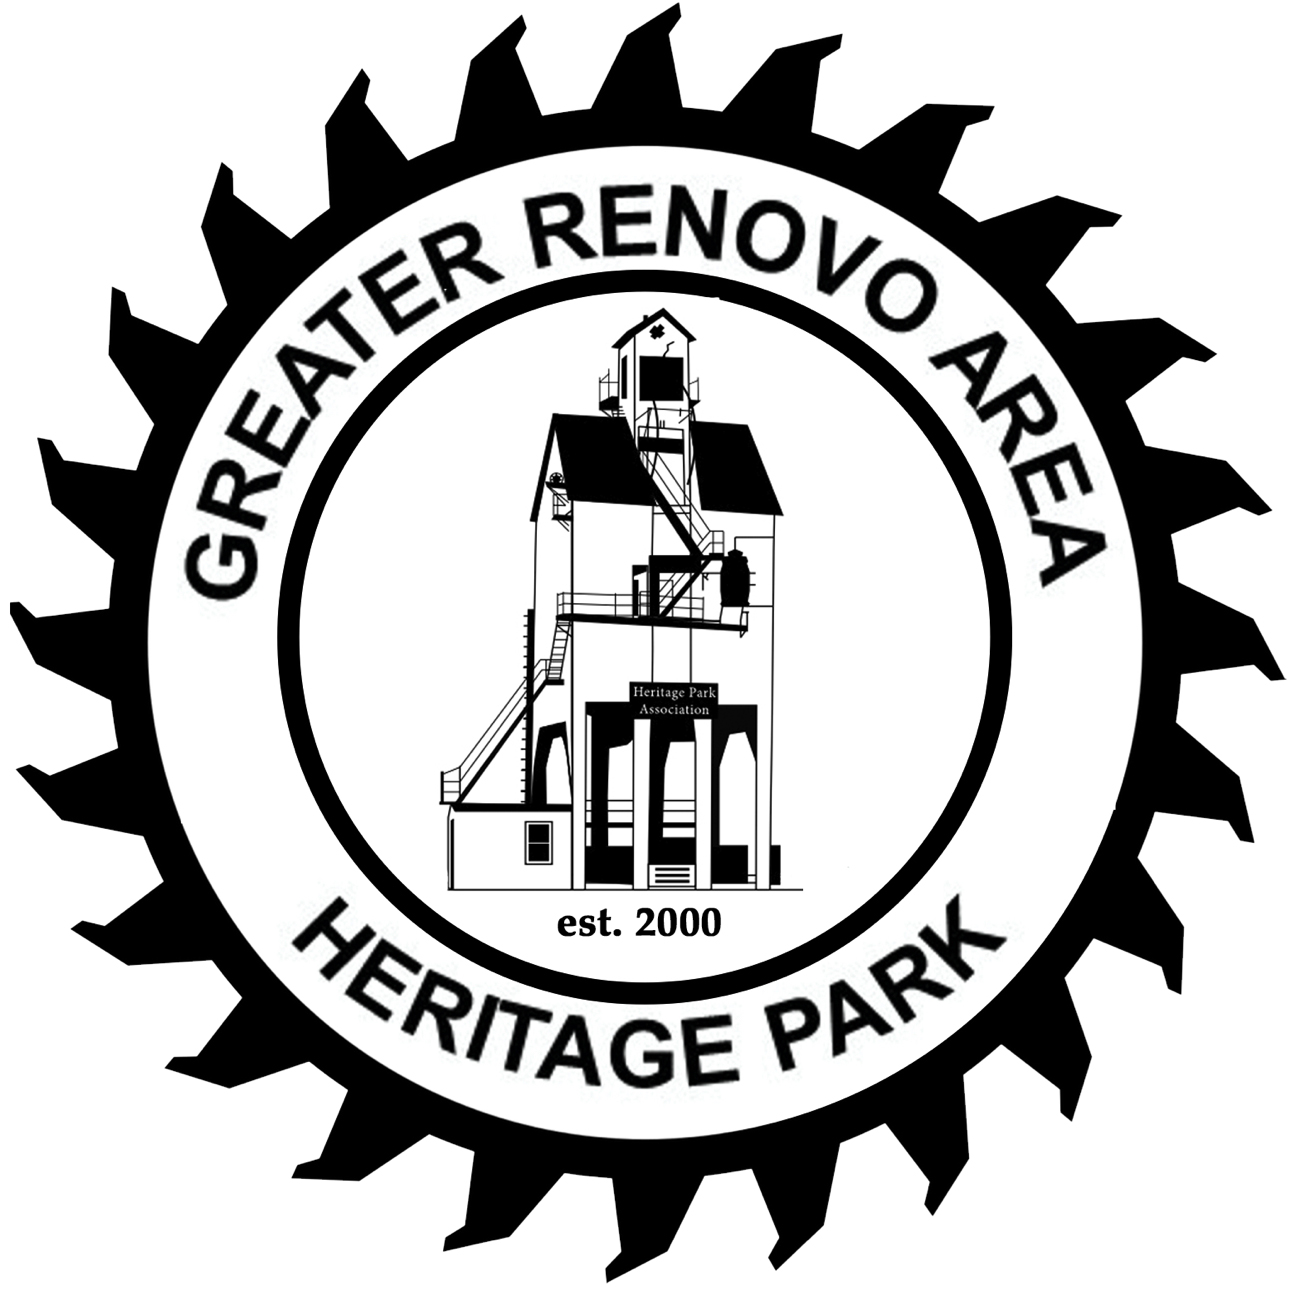 The Greater Renovo Area Heritage Park | admin, Author at The Greater Renovo Area Heritage Park